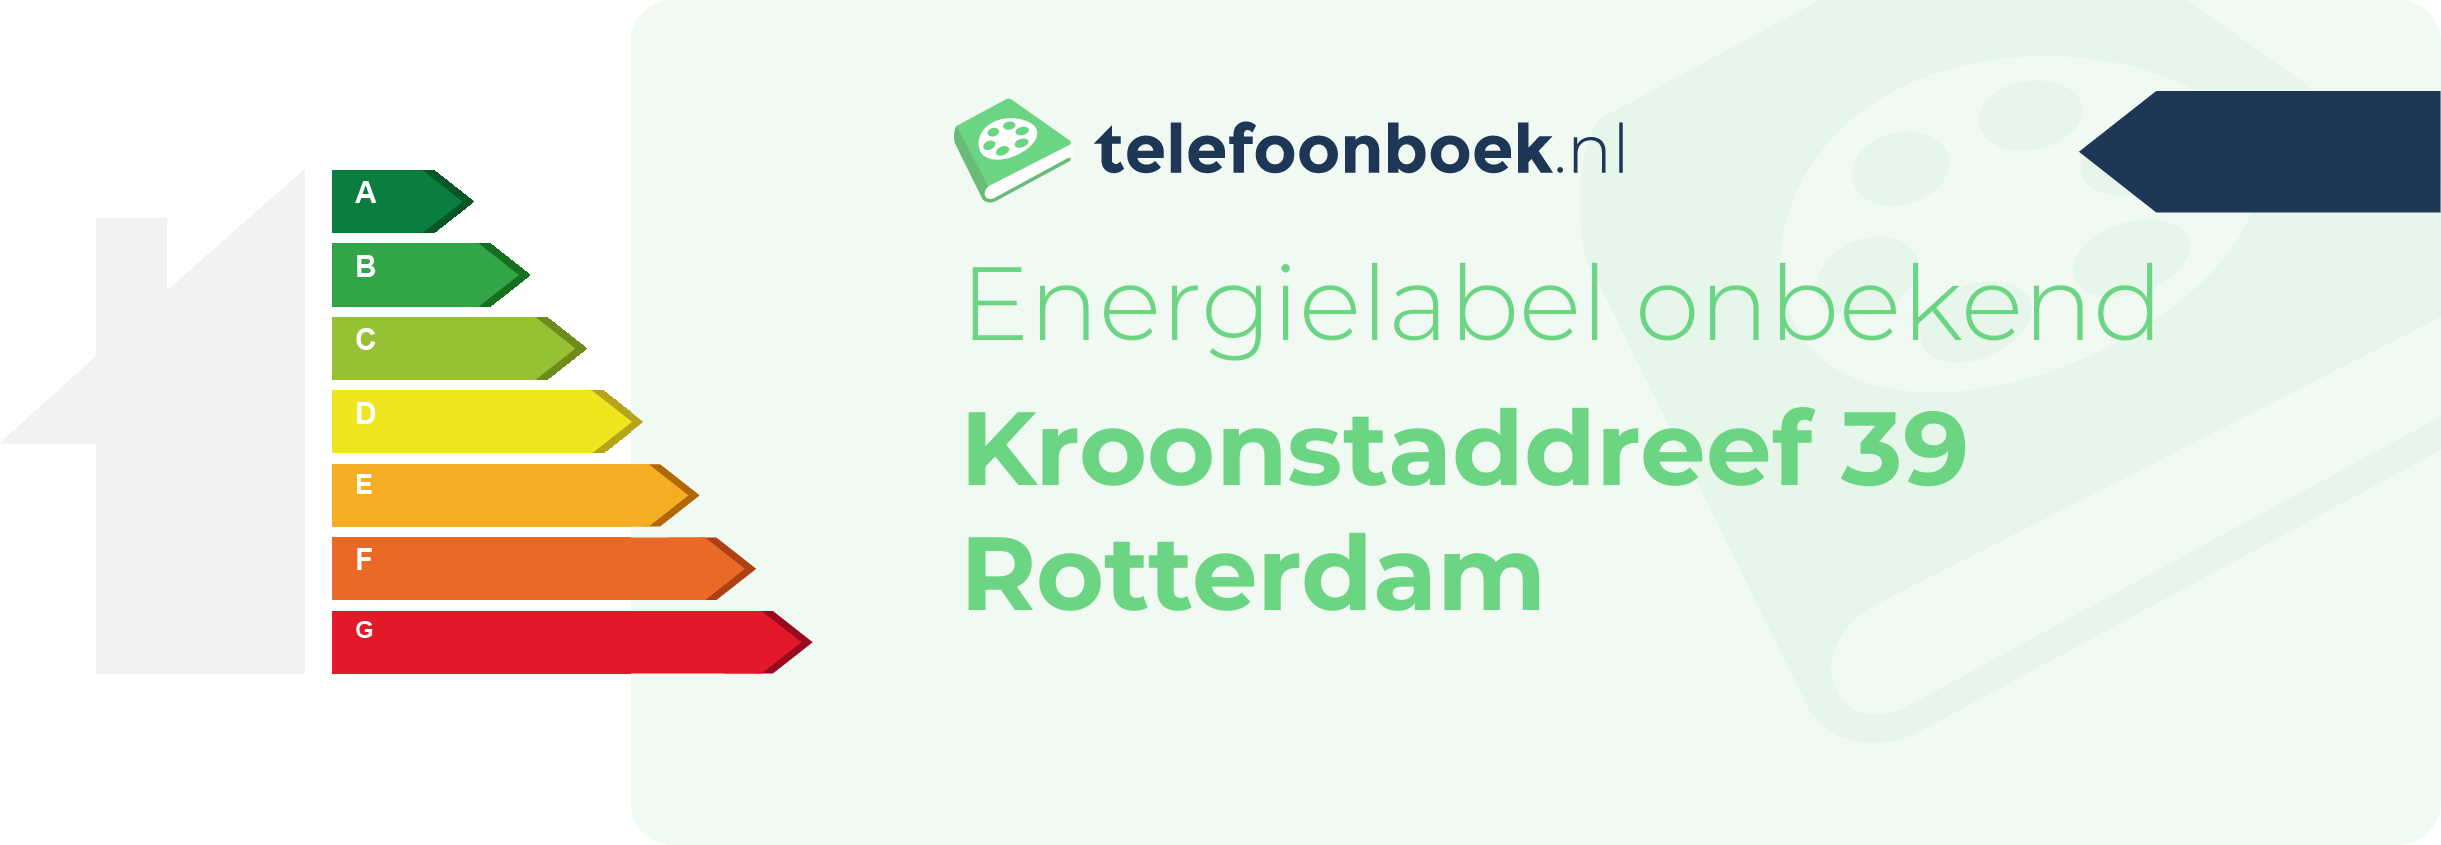 Energielabel Kroonstaddreef 39 Rotterdam